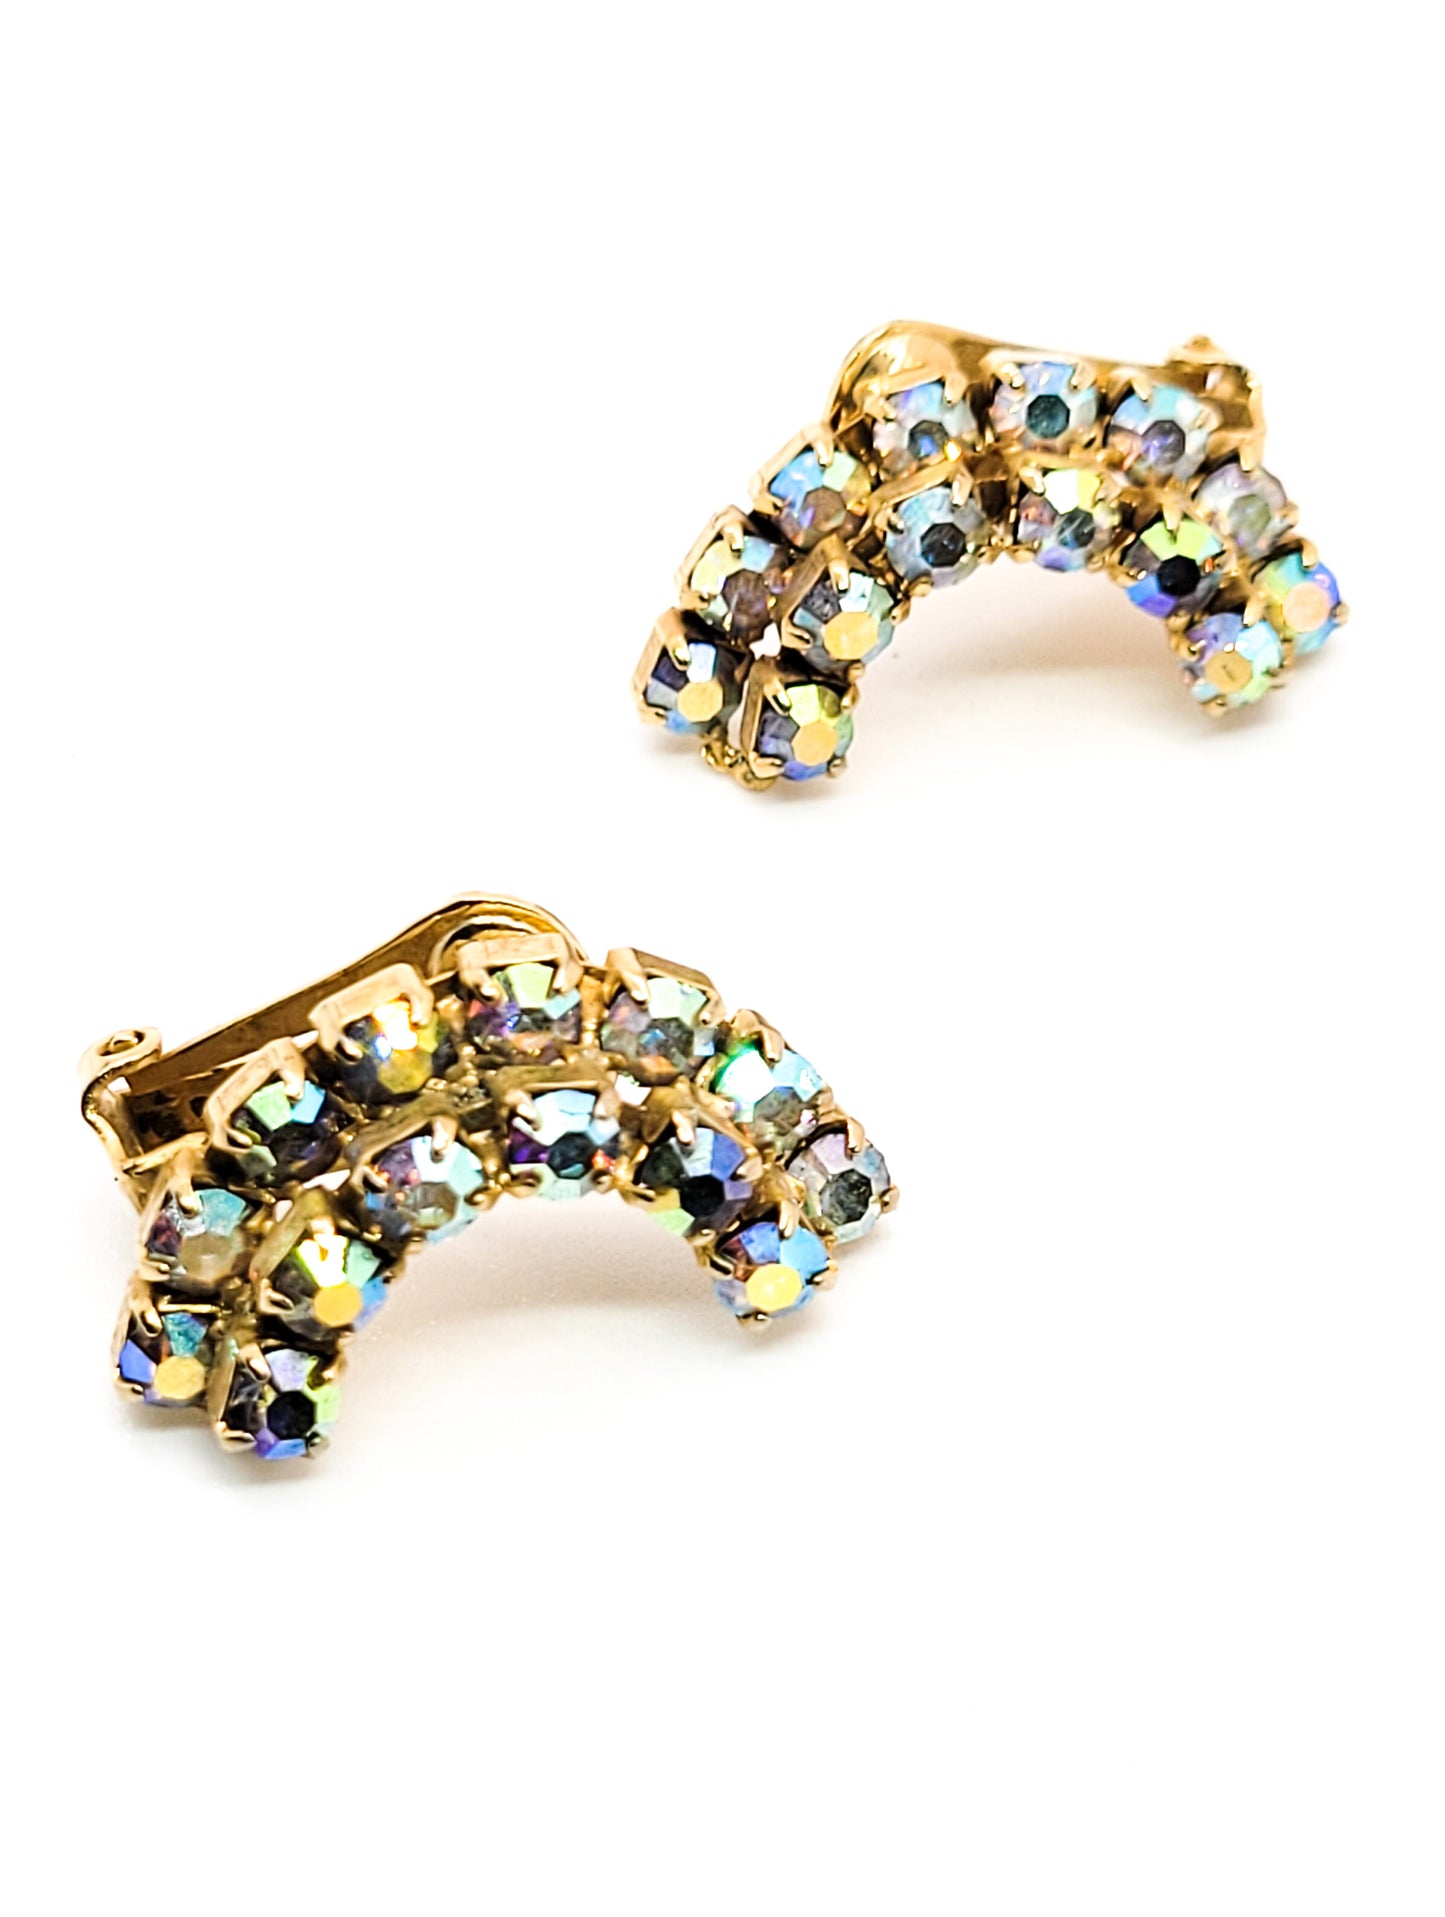 Rainbow Crescent Aurora Borealis AB gold toned prong set vintage rhinestone earrings